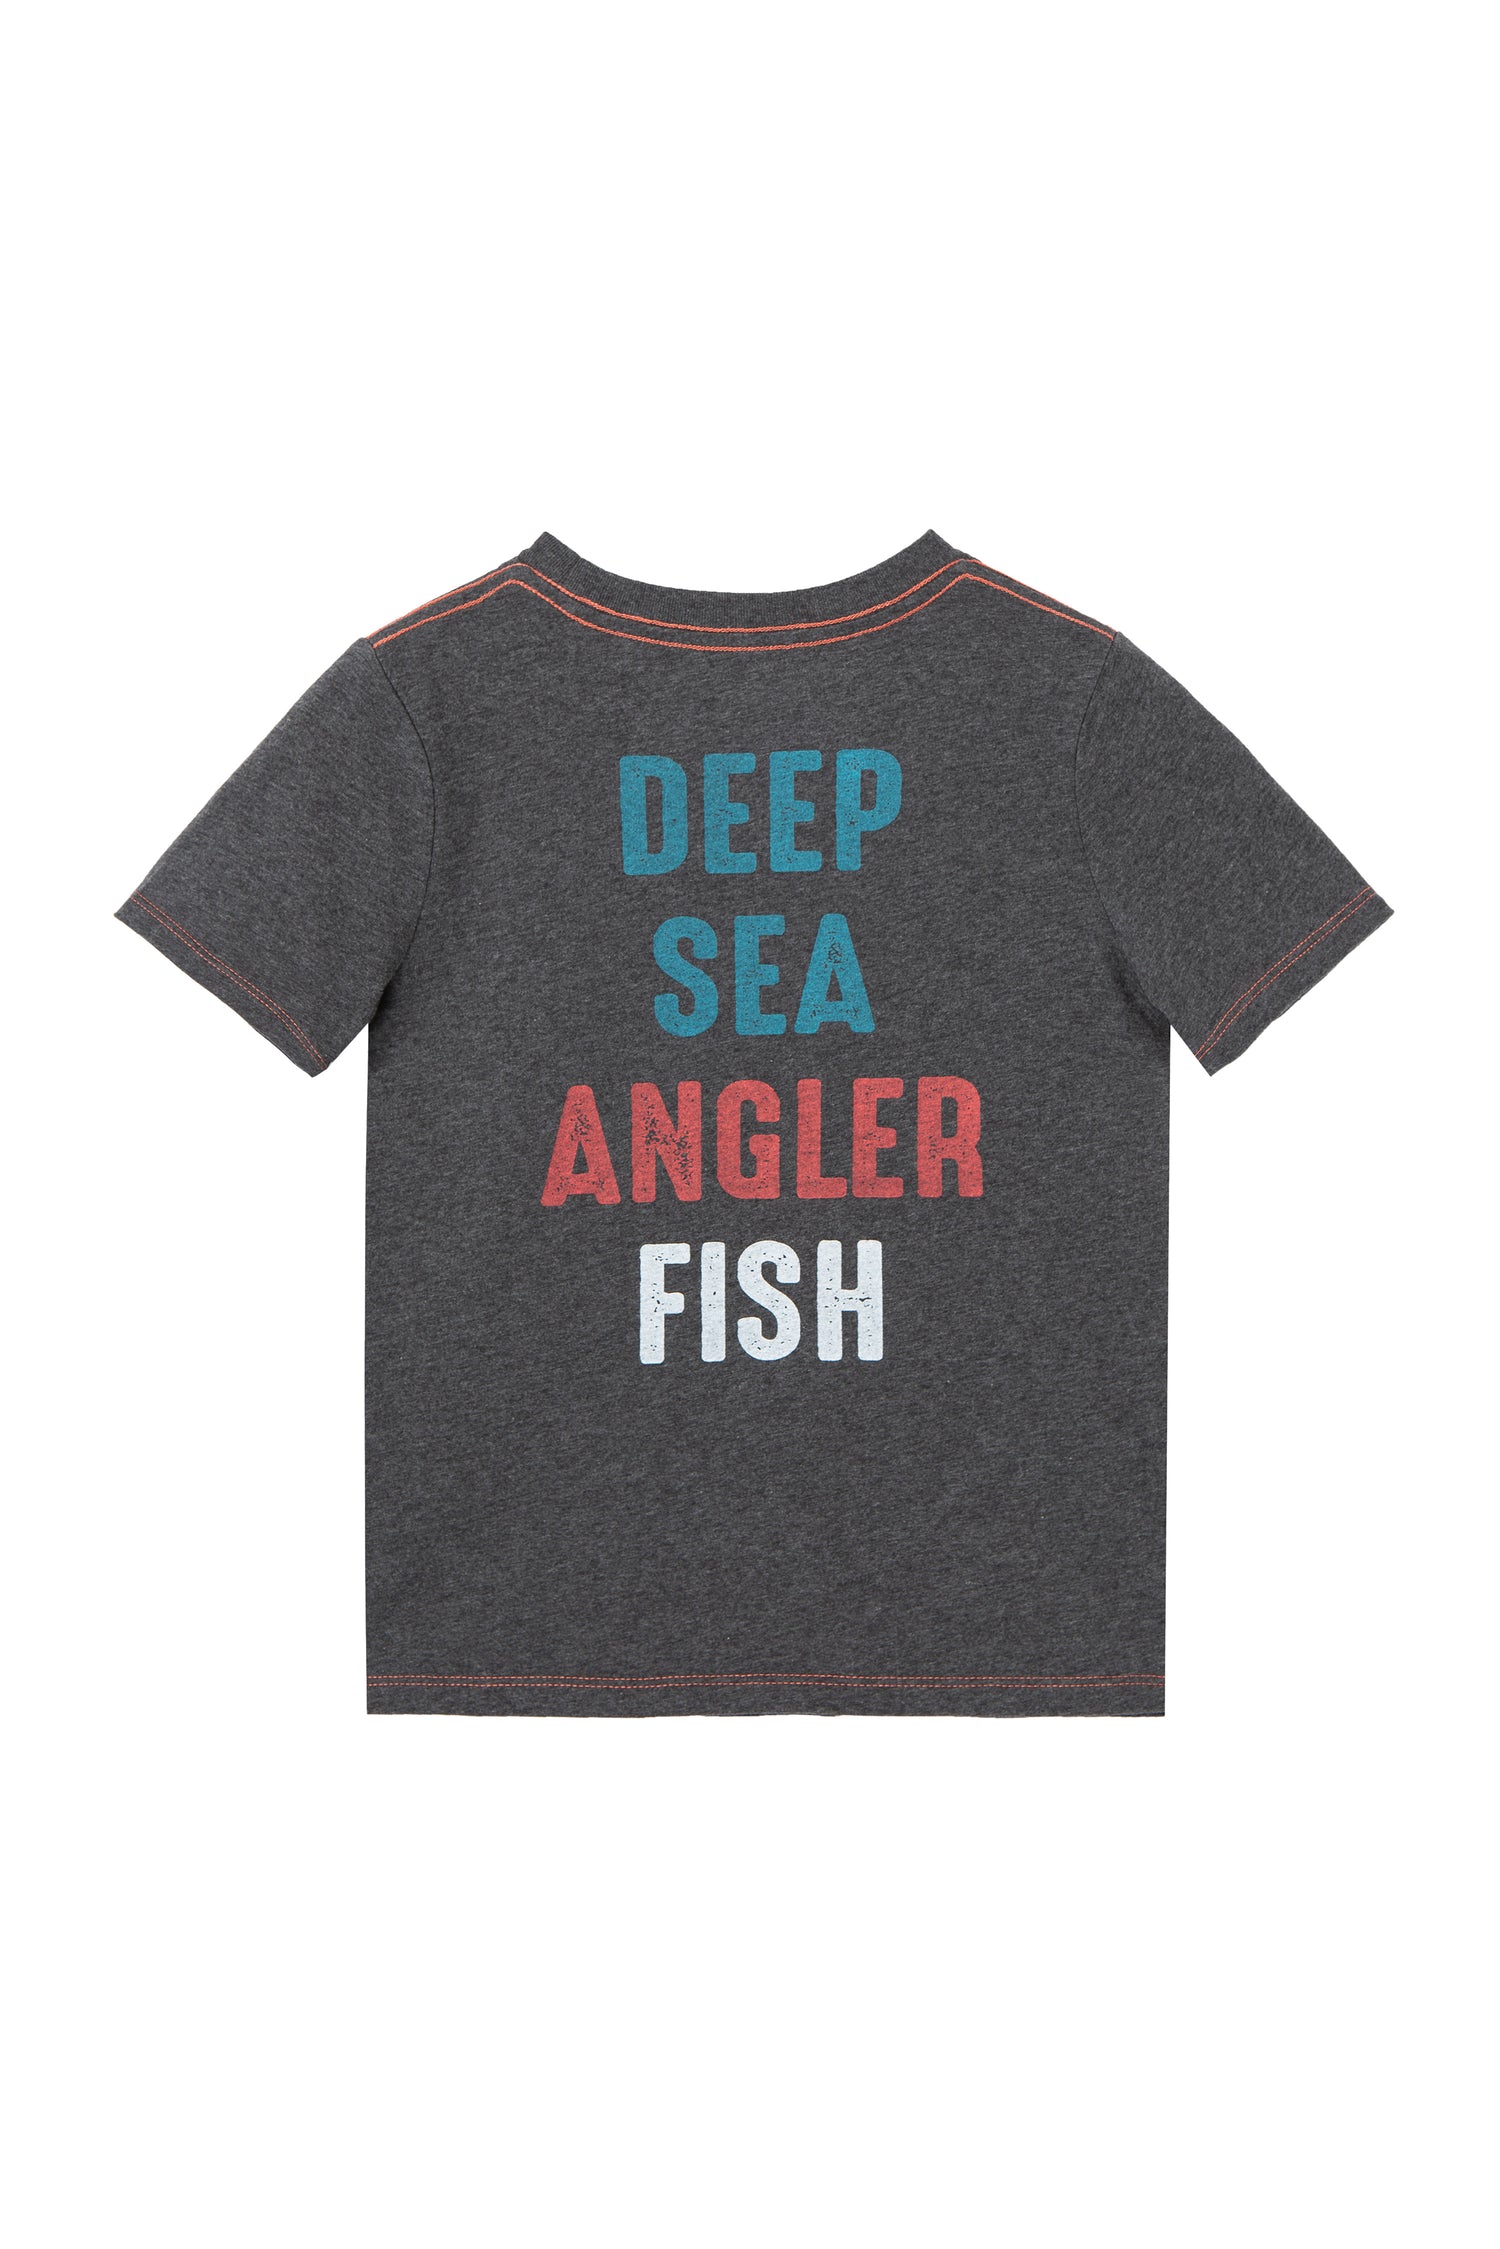 DARK GREY T-SHIRT WITH THE WORDS "DEEP SEA ANGLER FISH"